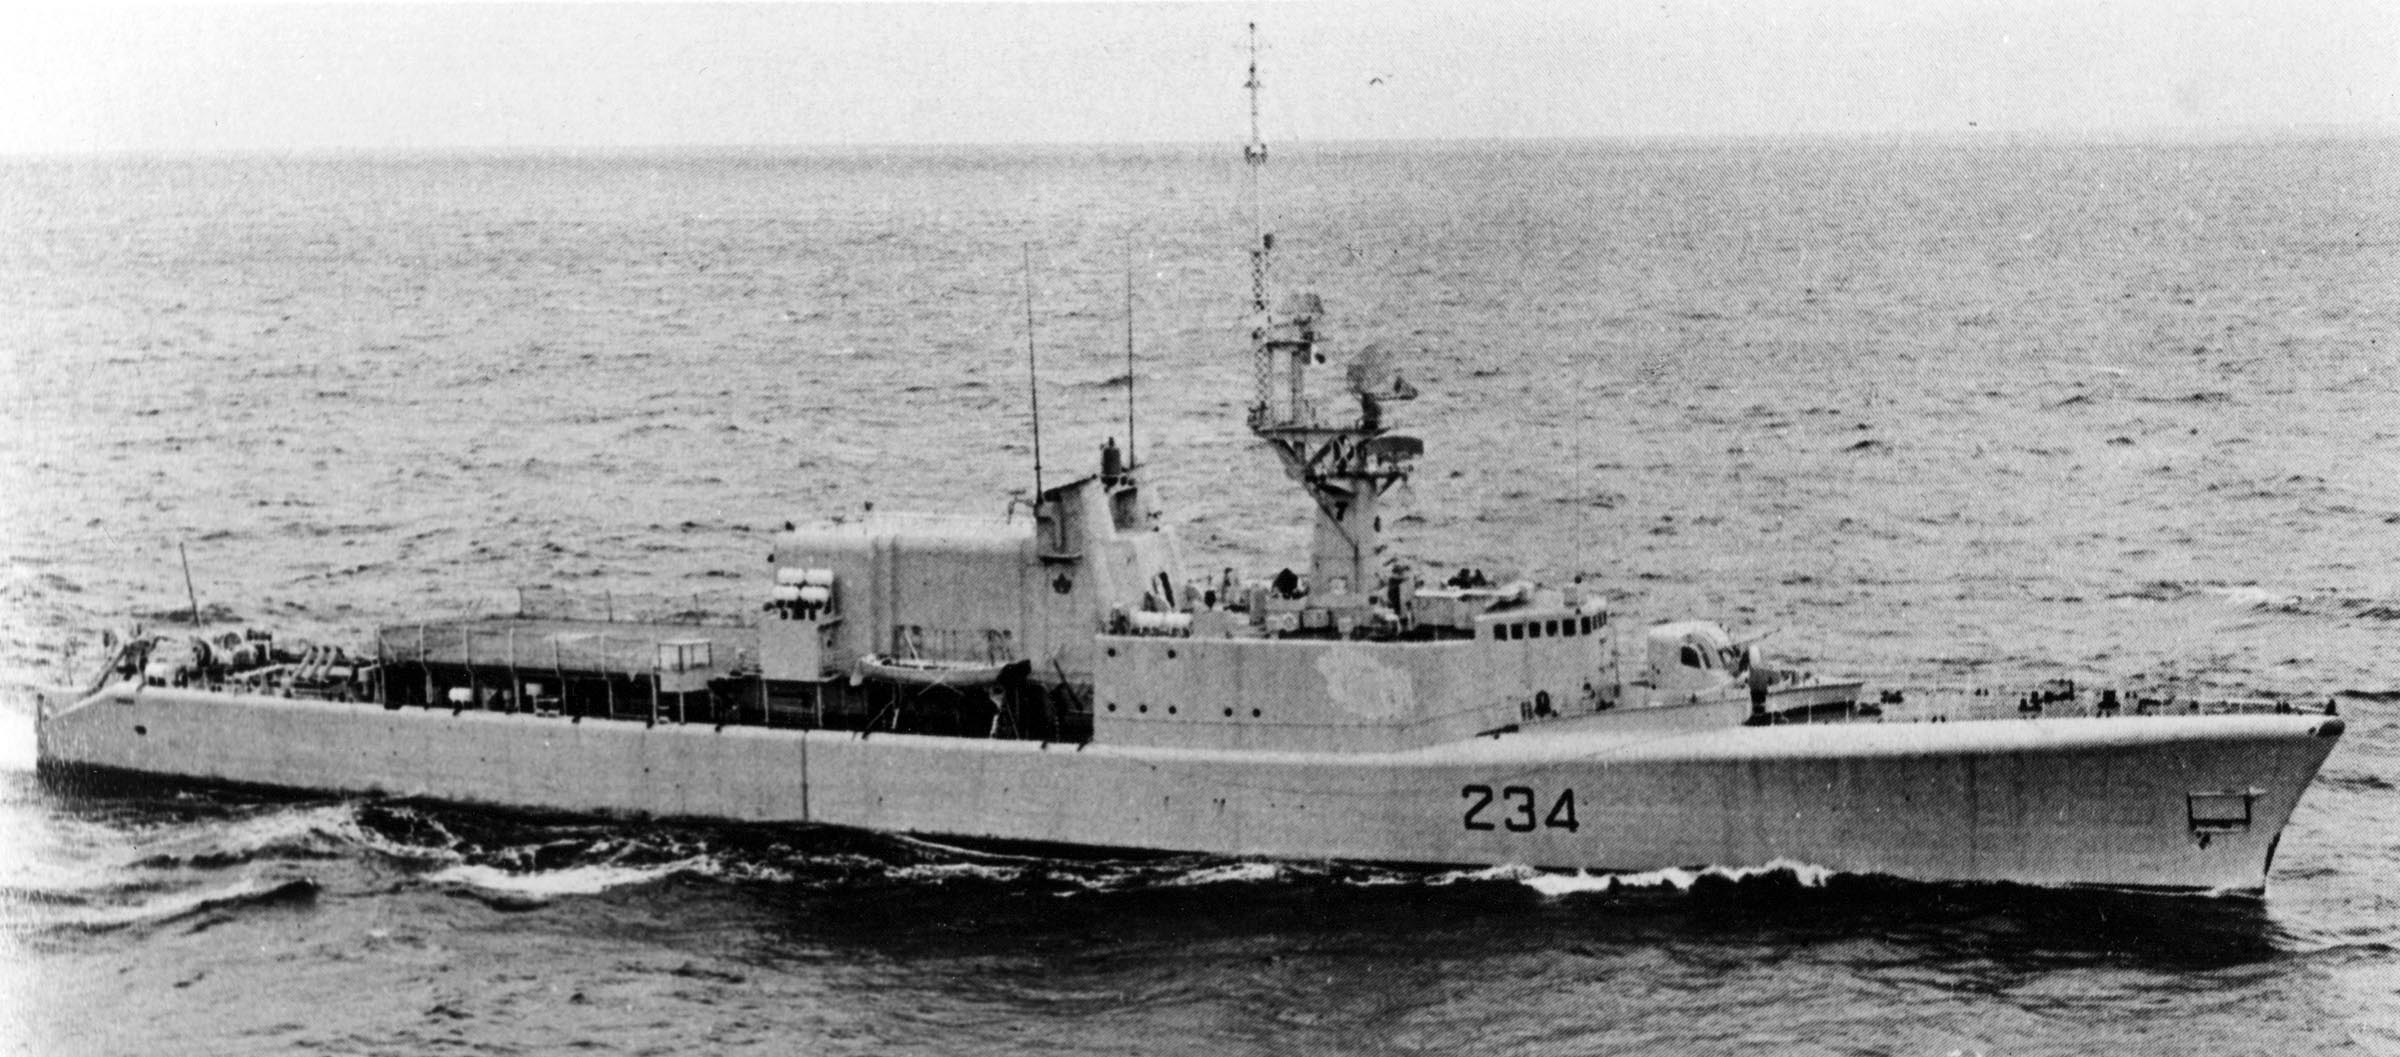 HMCS ASSINIBOINE (2nd)